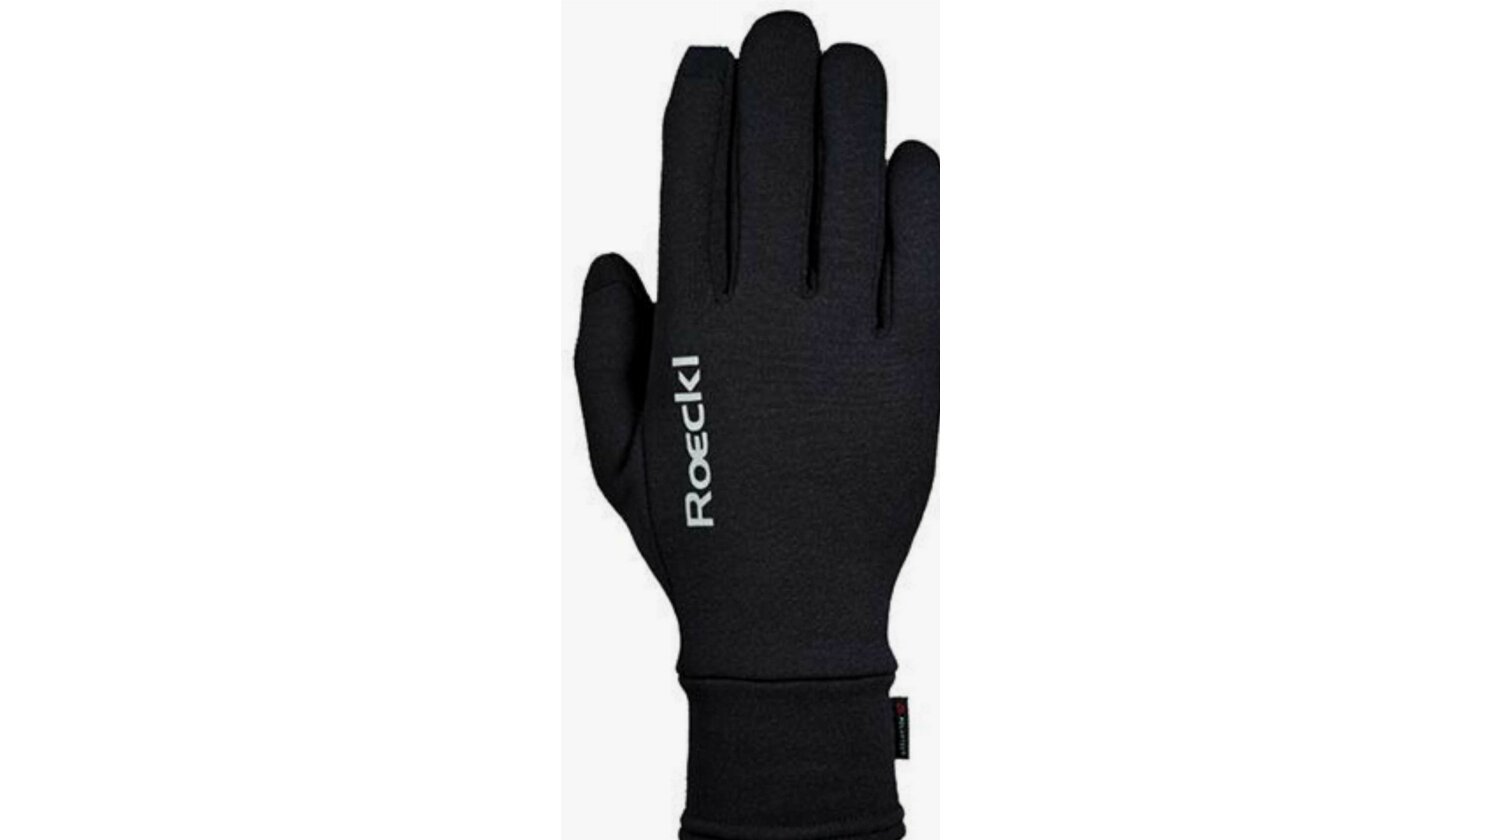 Roeckl Paulista Handschuhe lang black